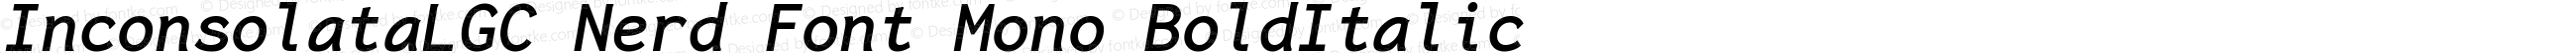 Inconsolata LGC Bold Italic Nerd Font Complete Mono